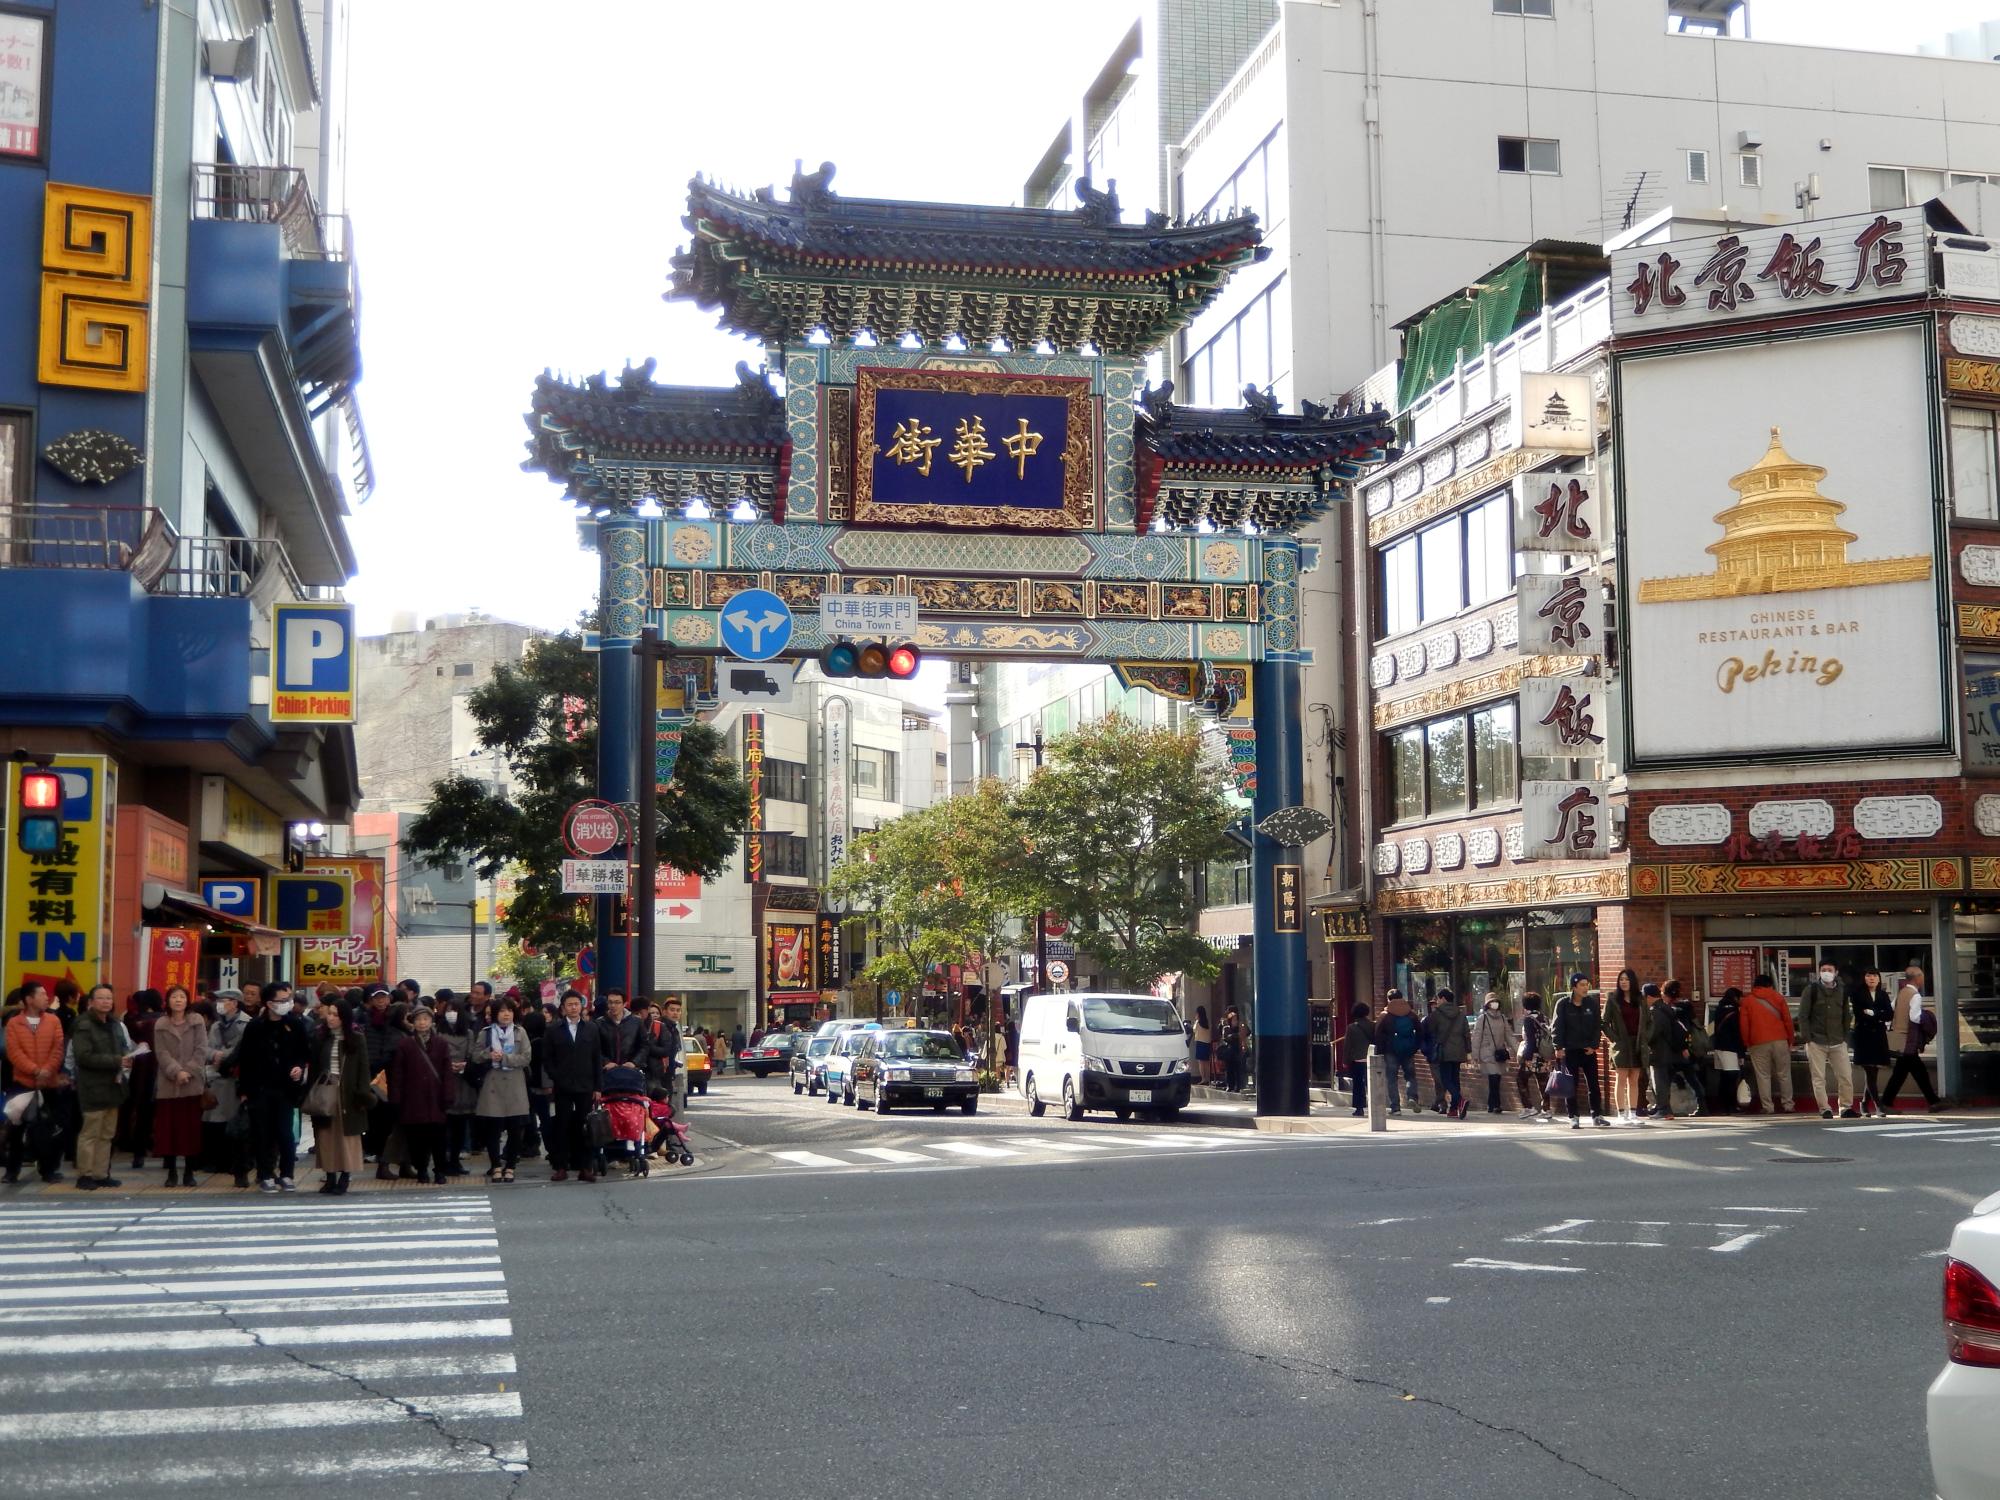 Japan (2015) - Chinatown Entrance #1